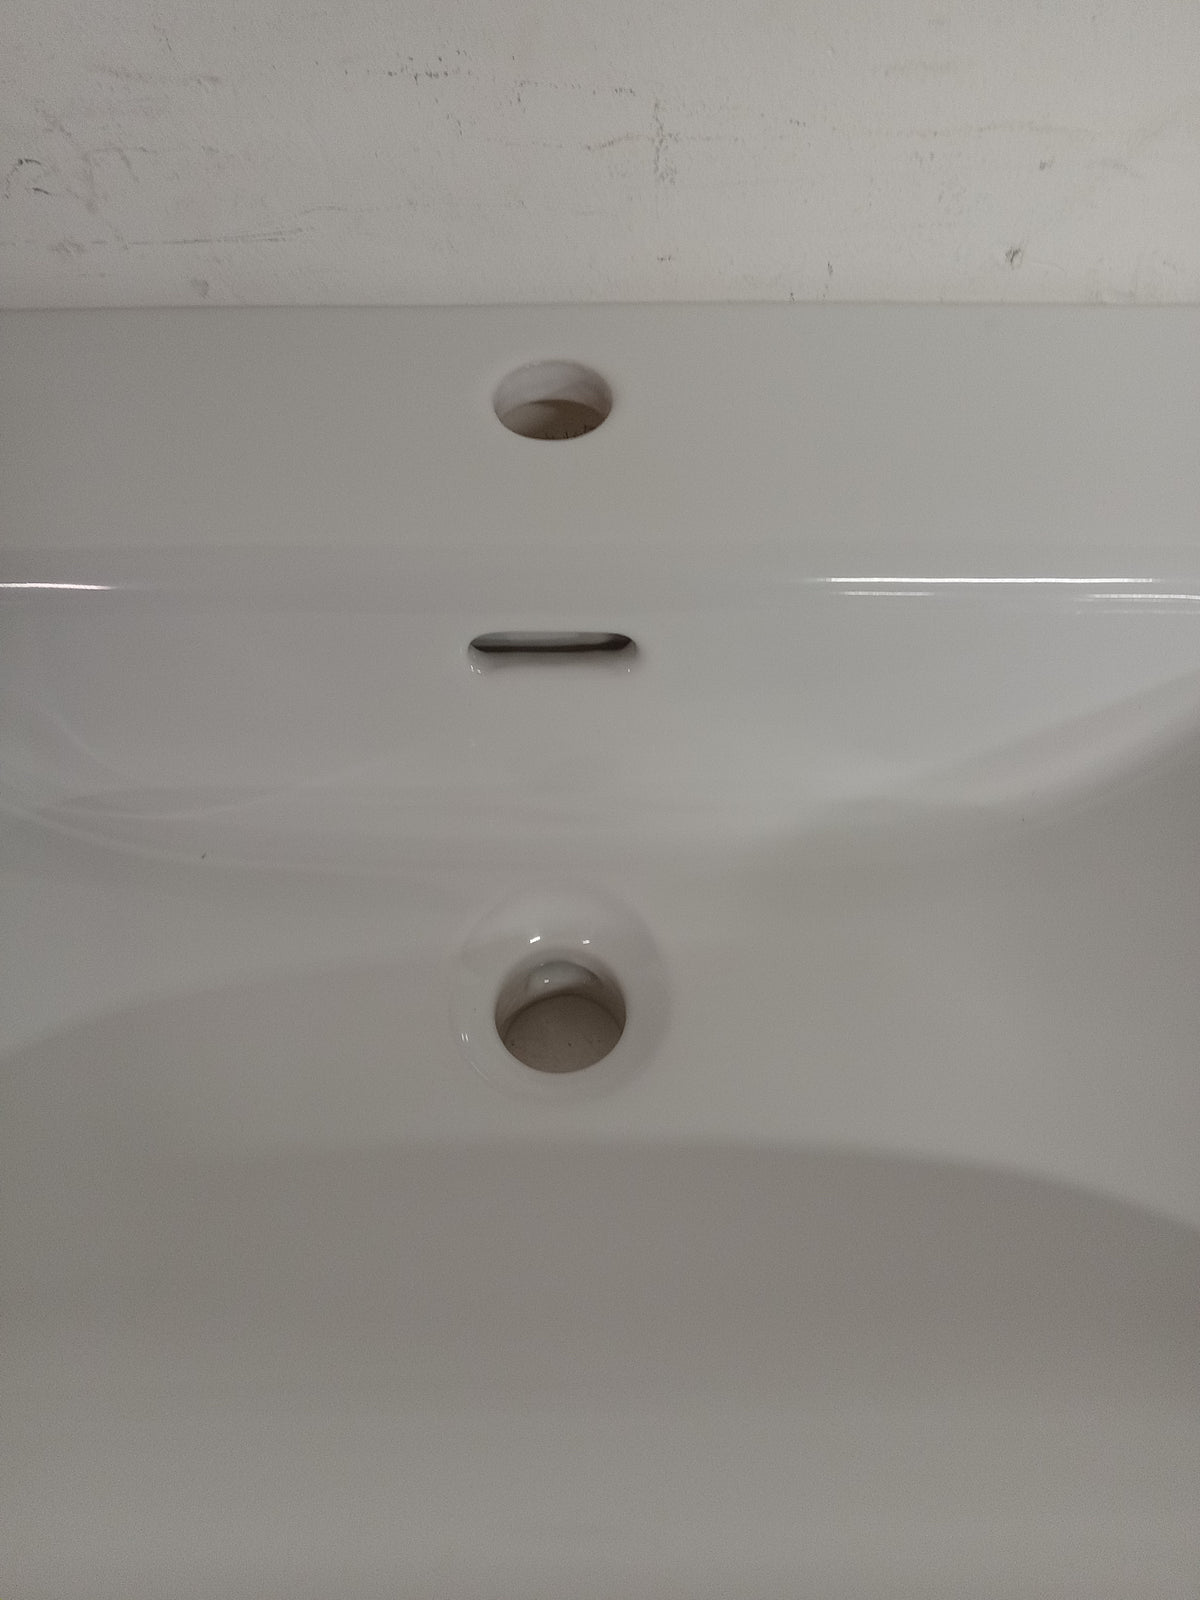 24"W Ceramic Rectangular Drop in Sink